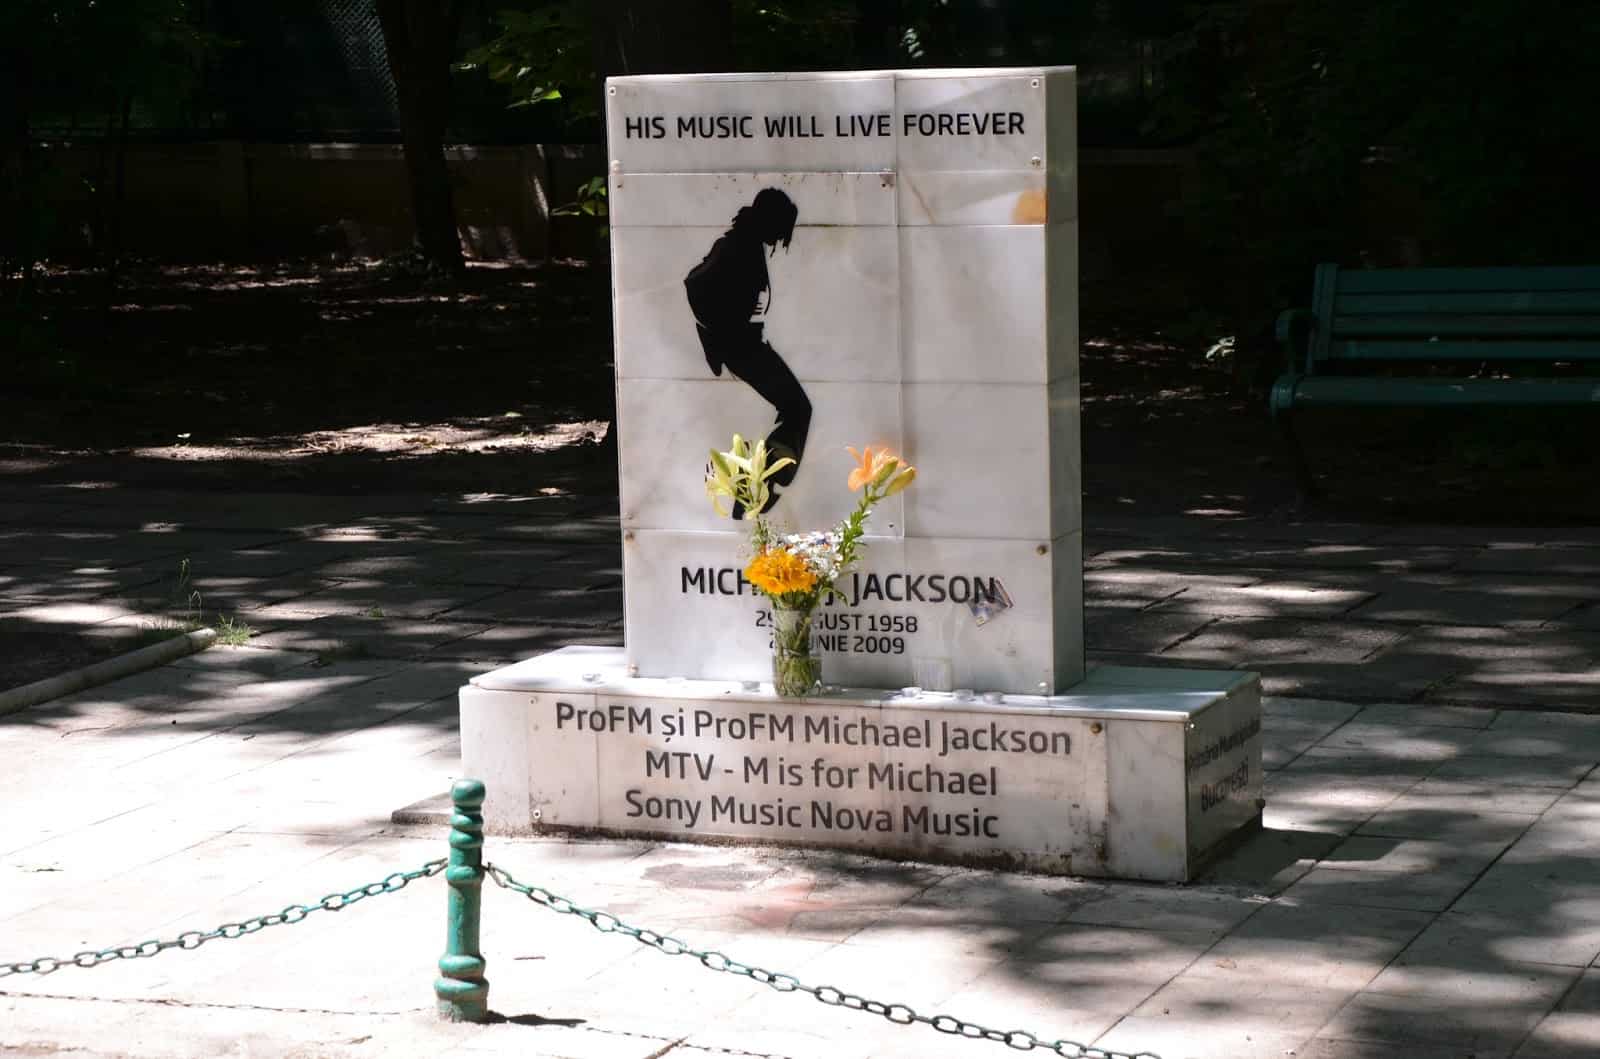 Michael Jackson memorial at Parcul Herăstrău in Bucharest, Romania